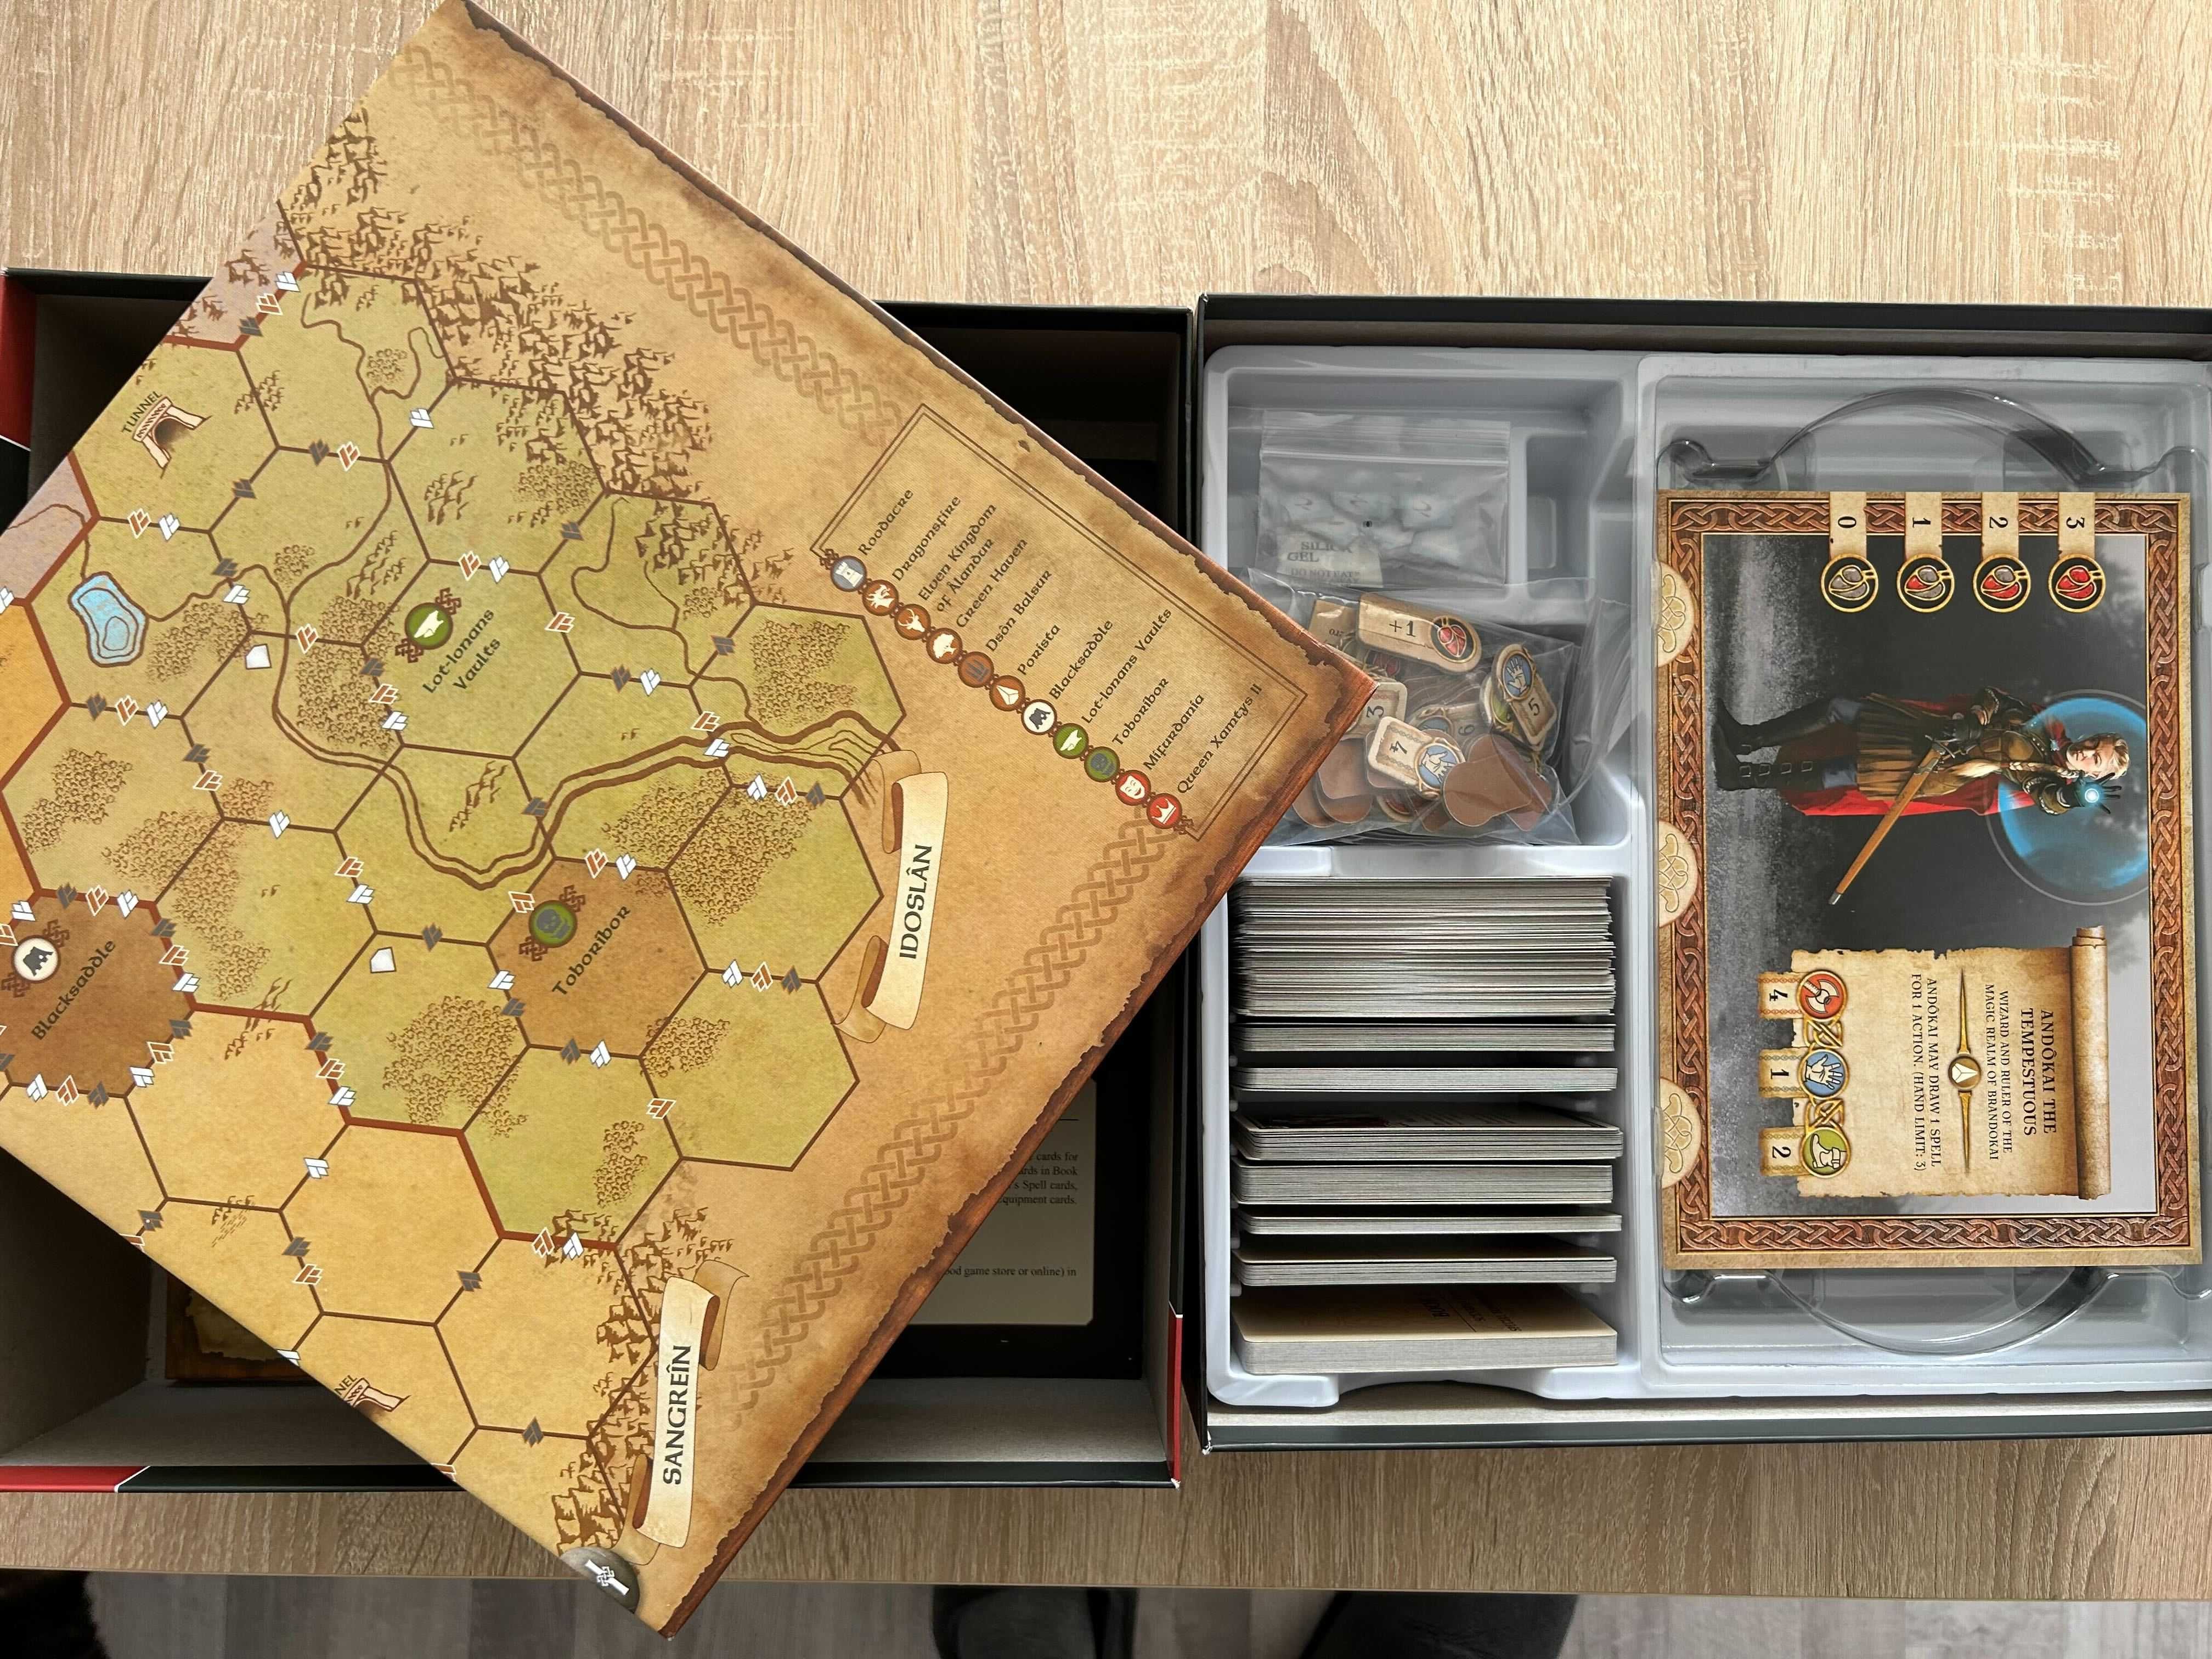 The Dwarves: Big Box Boardgame